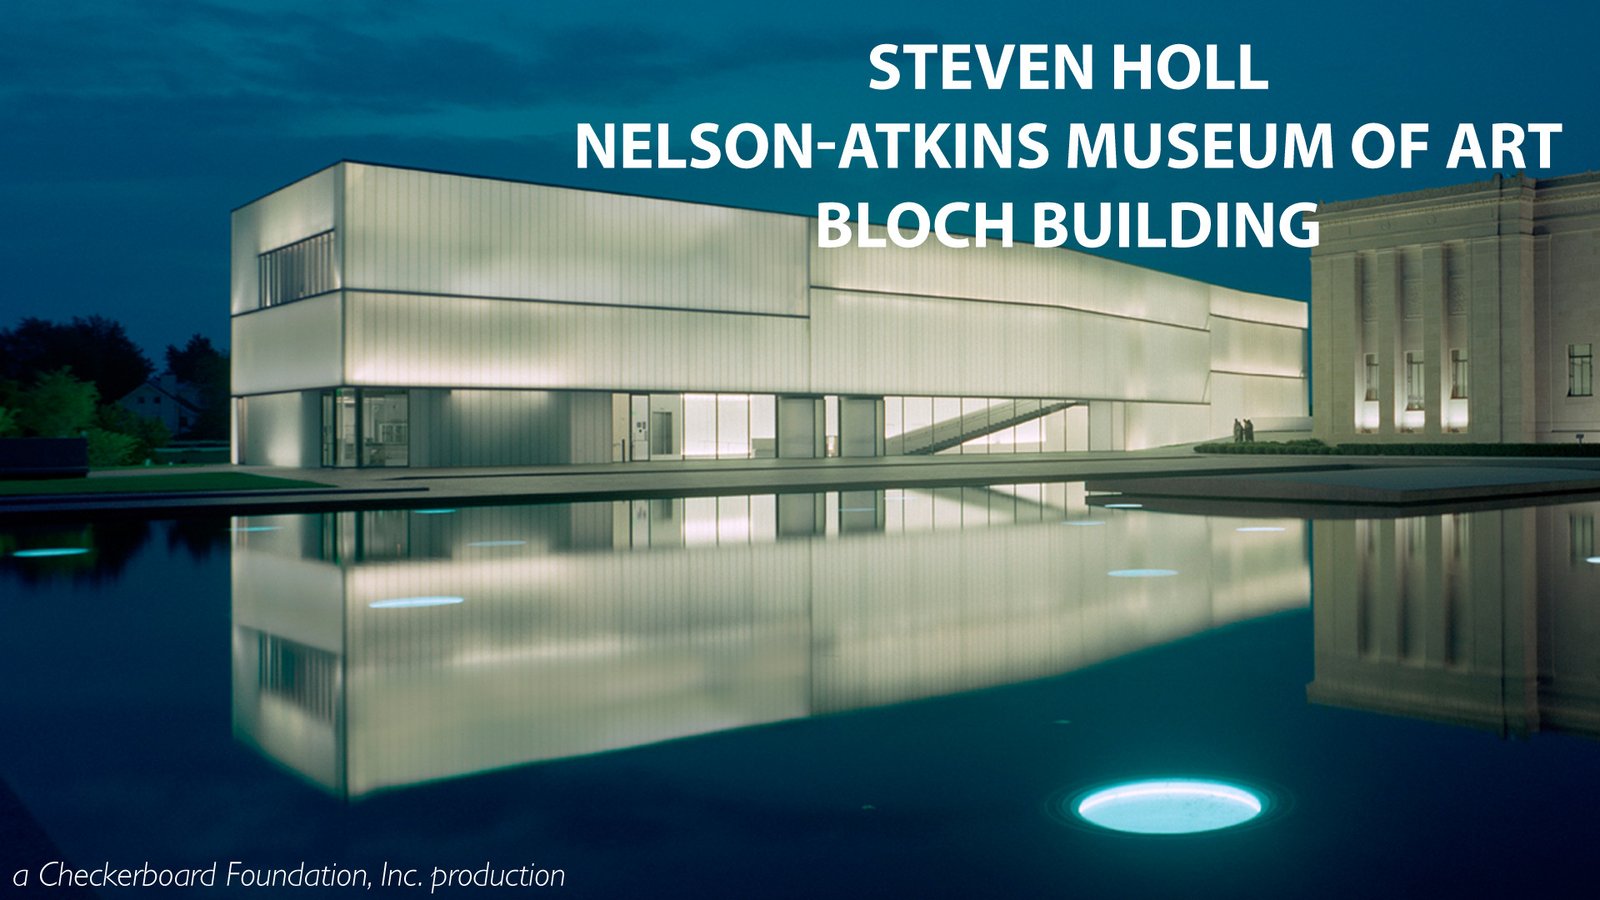 Steven Holl - The Nelson-Atkins Museum of Art, Bloch Building